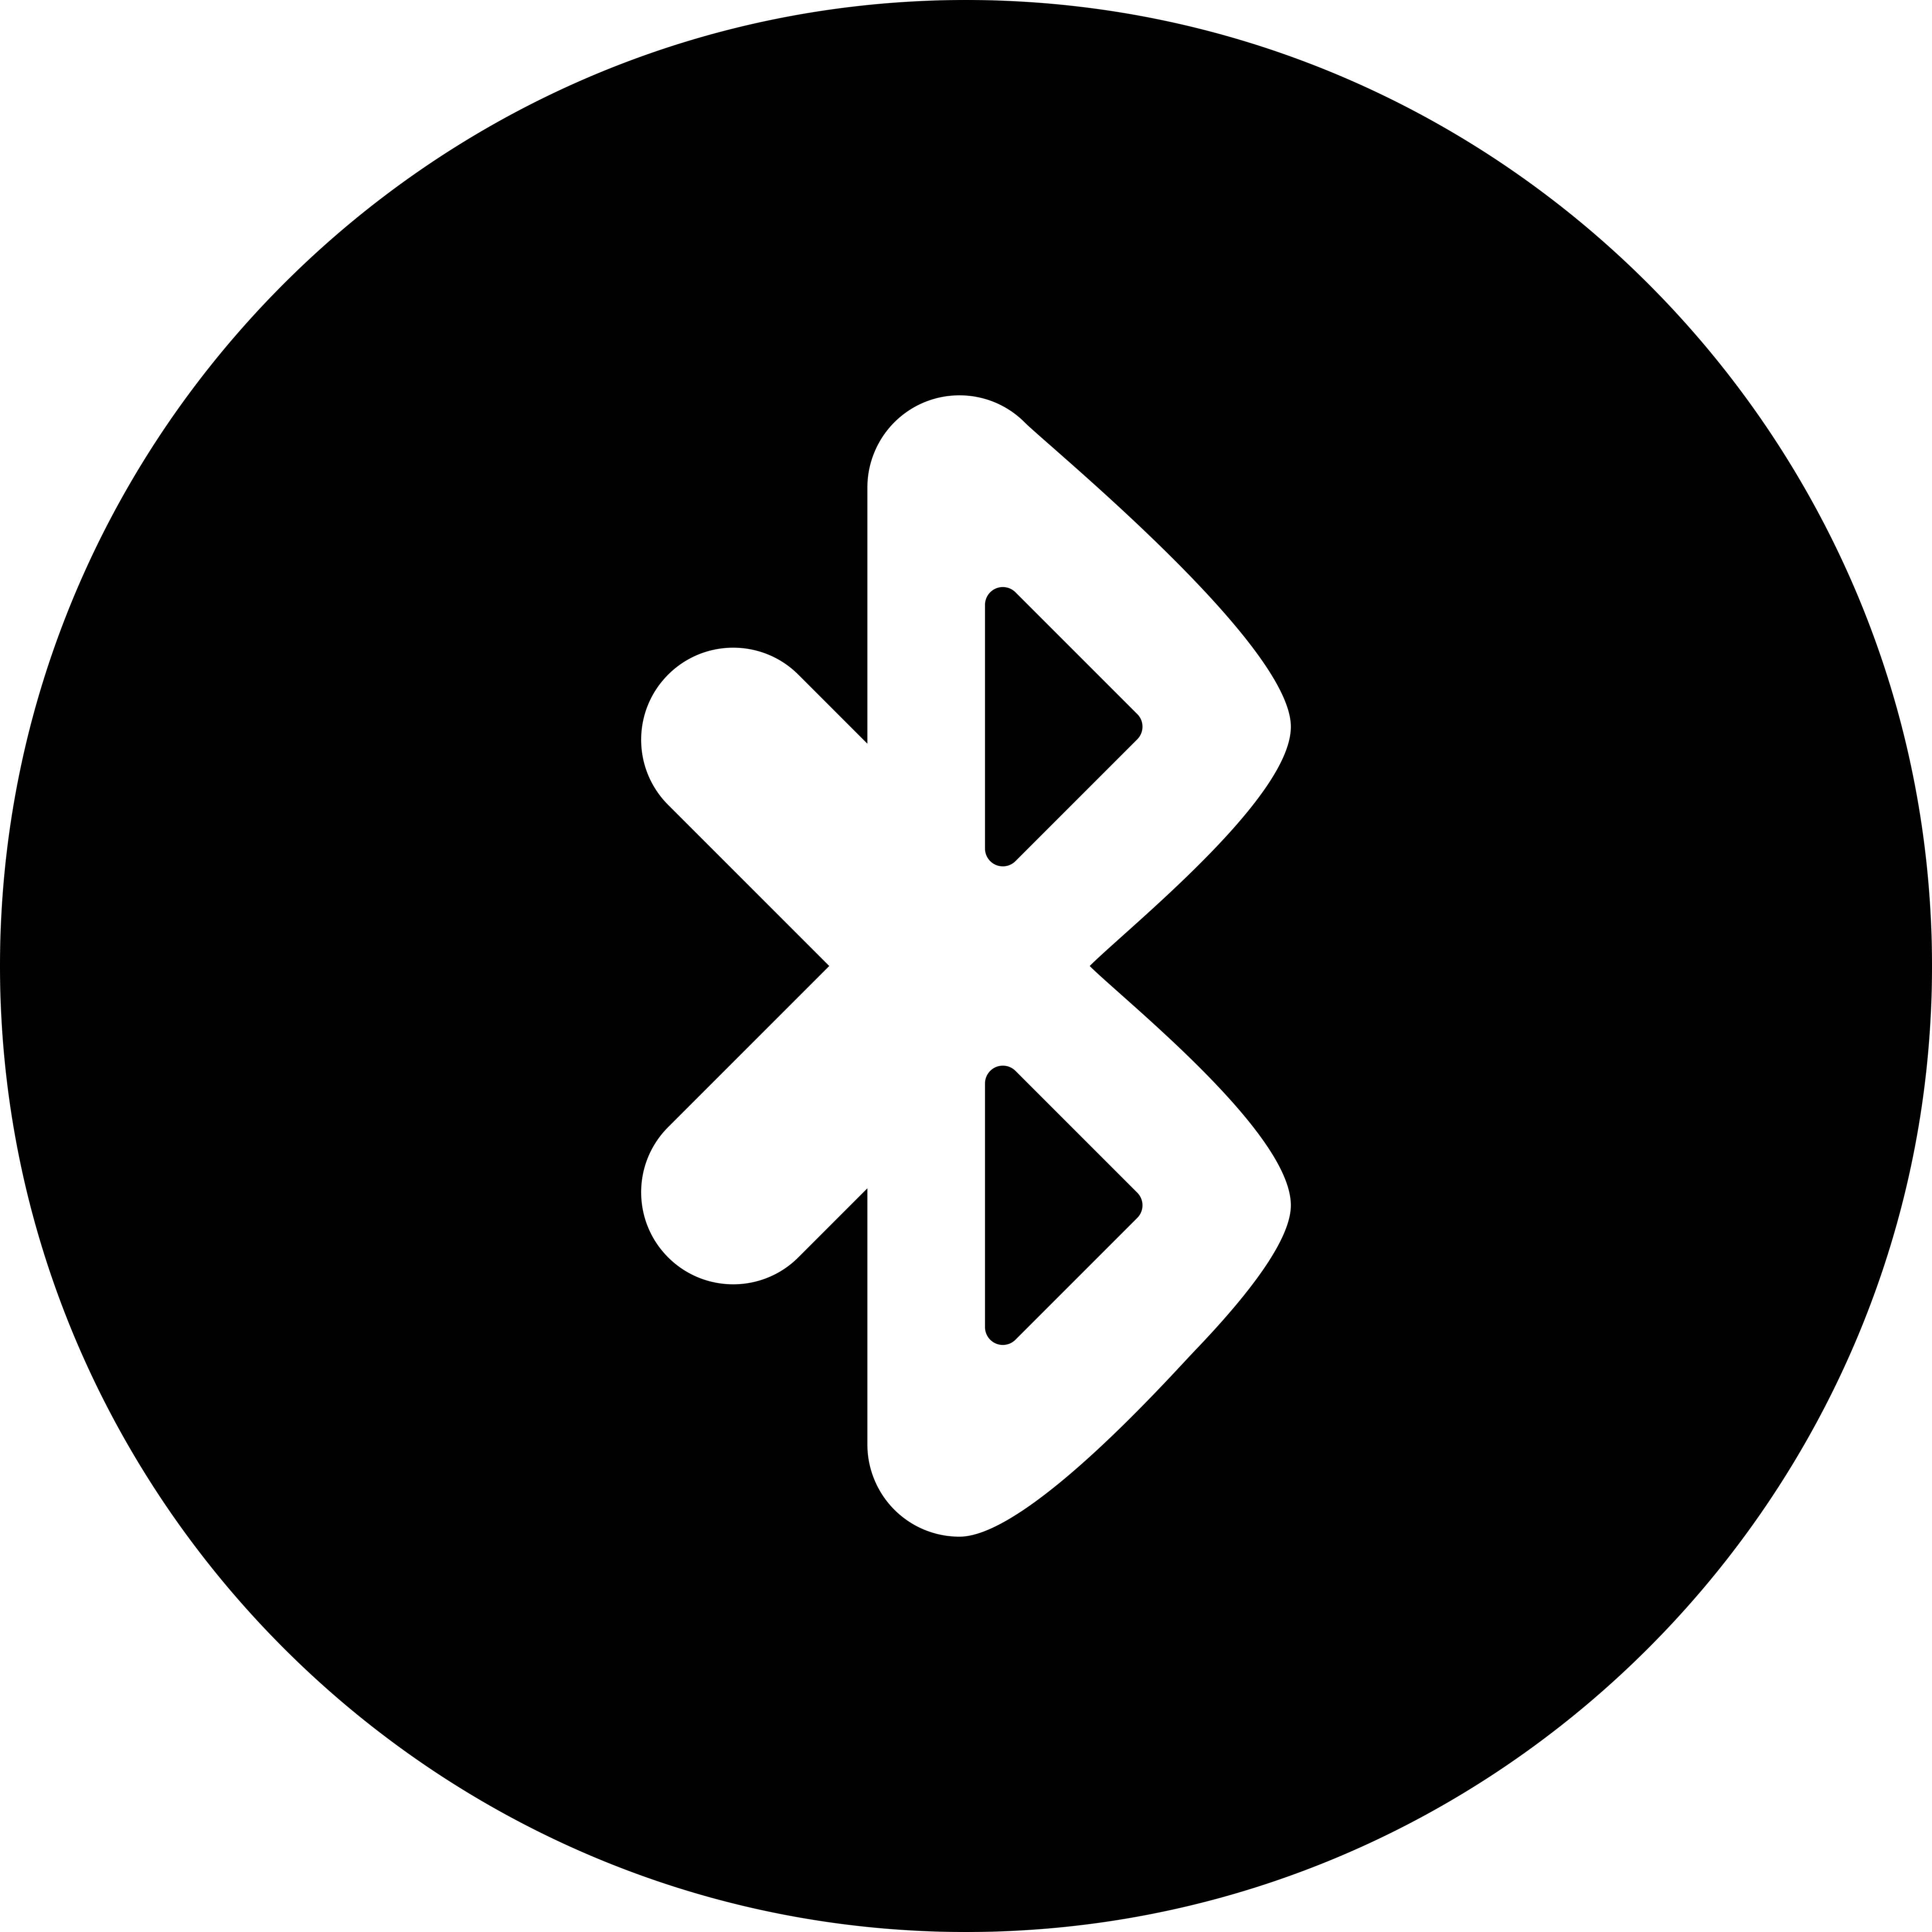 Bluetooth Vector Icon - Download Free Vectors, Clipart ...